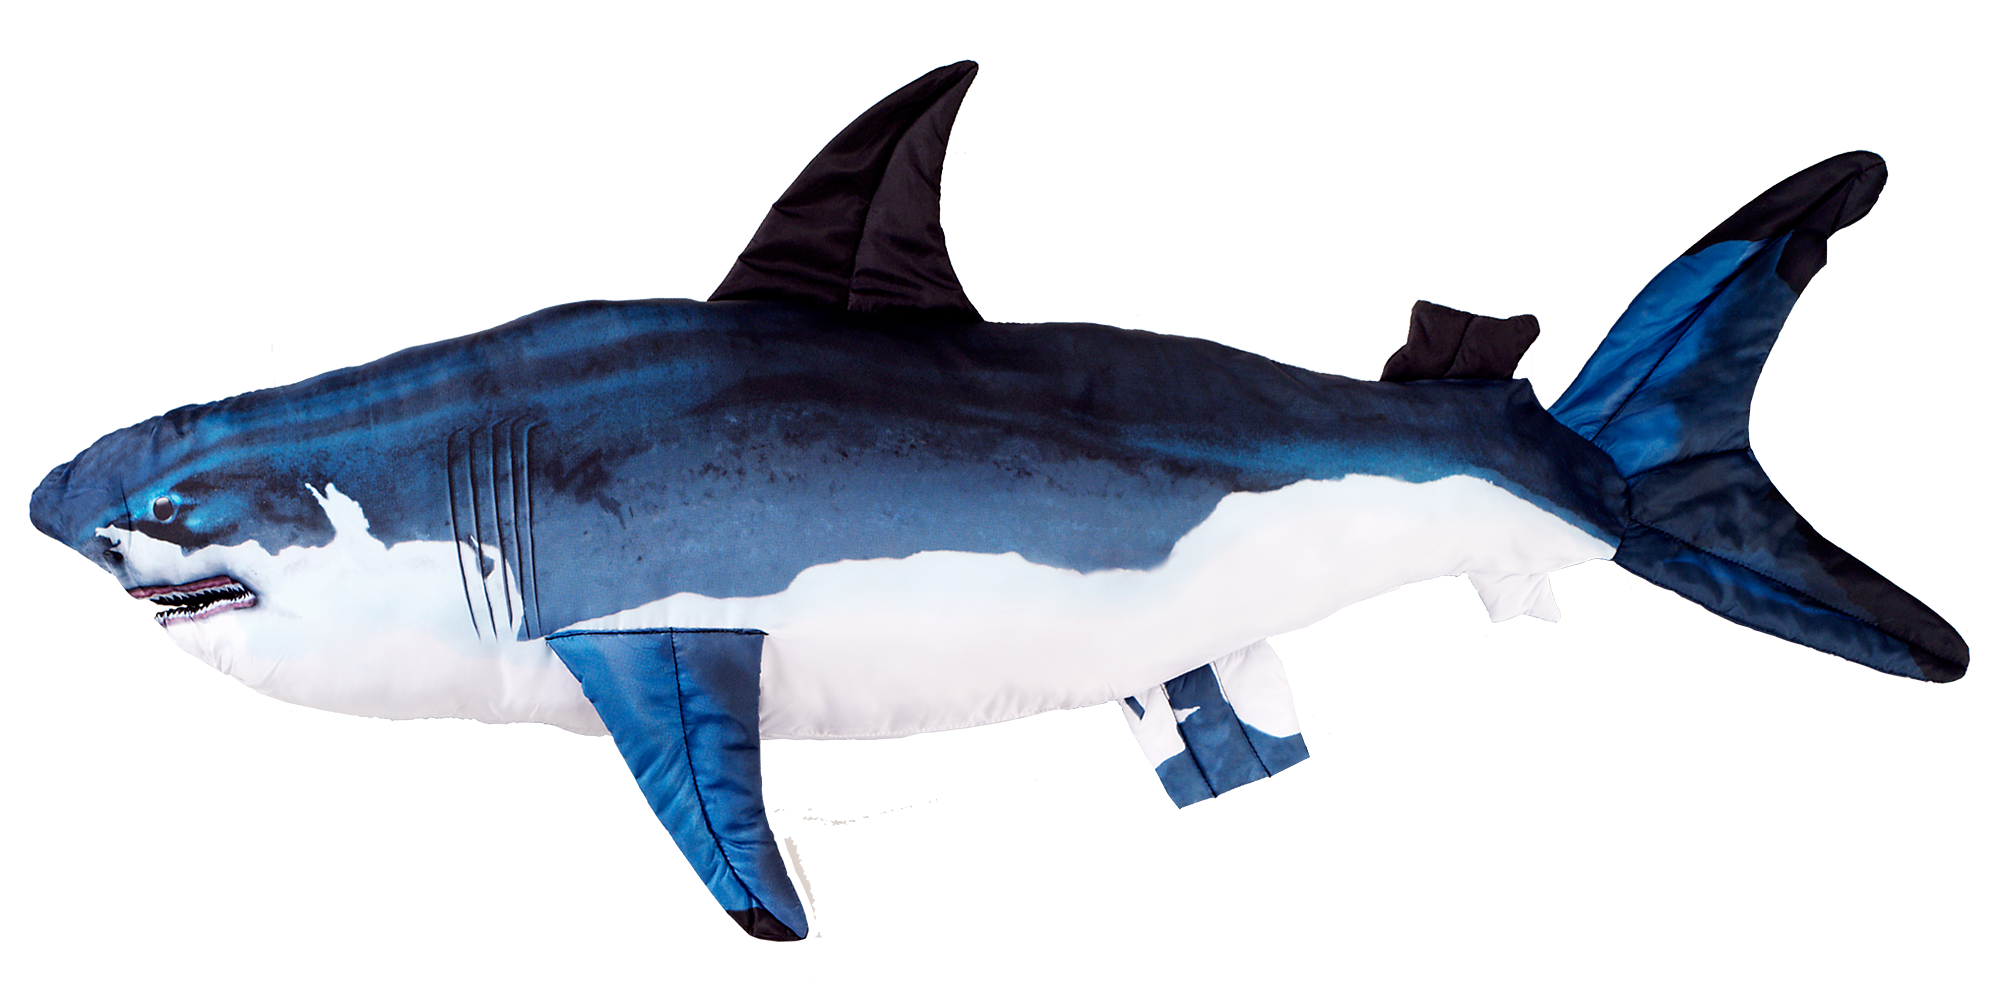 Bass Pro Shops Giant Stuffed Shark for Kids